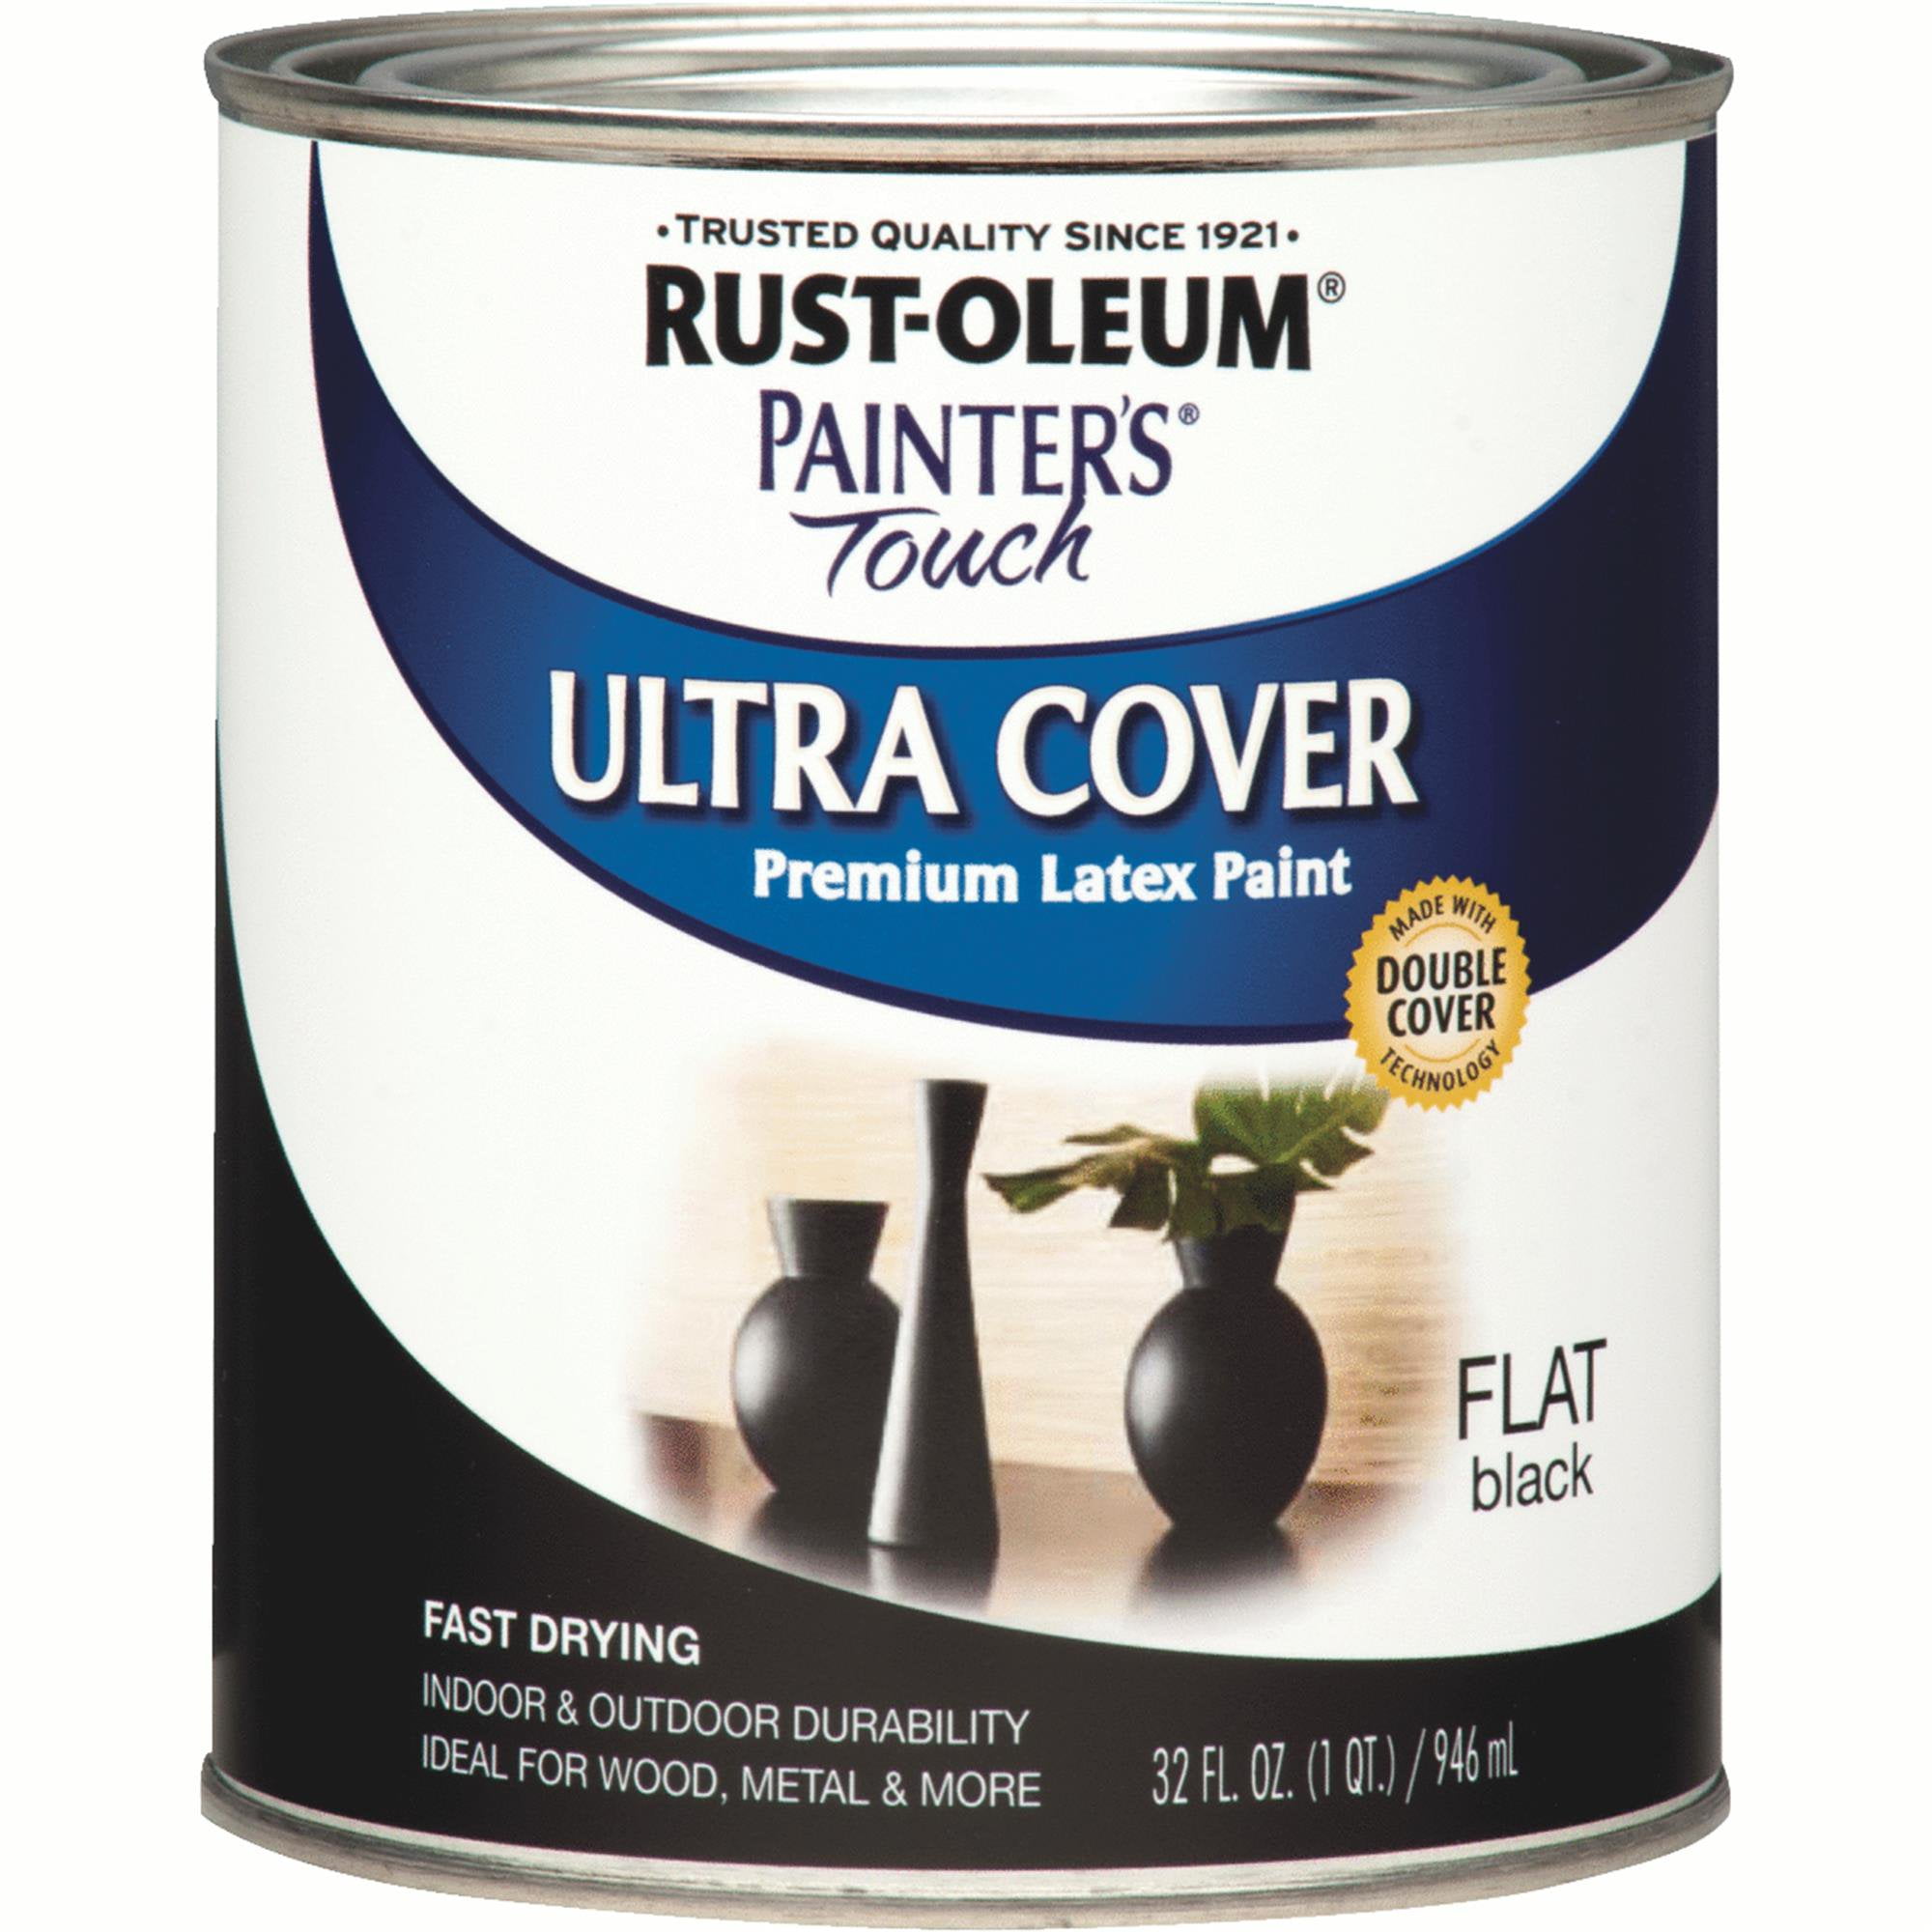 RustOleum Painter's Touch 2X Ultra Cover Premium Latex Paint